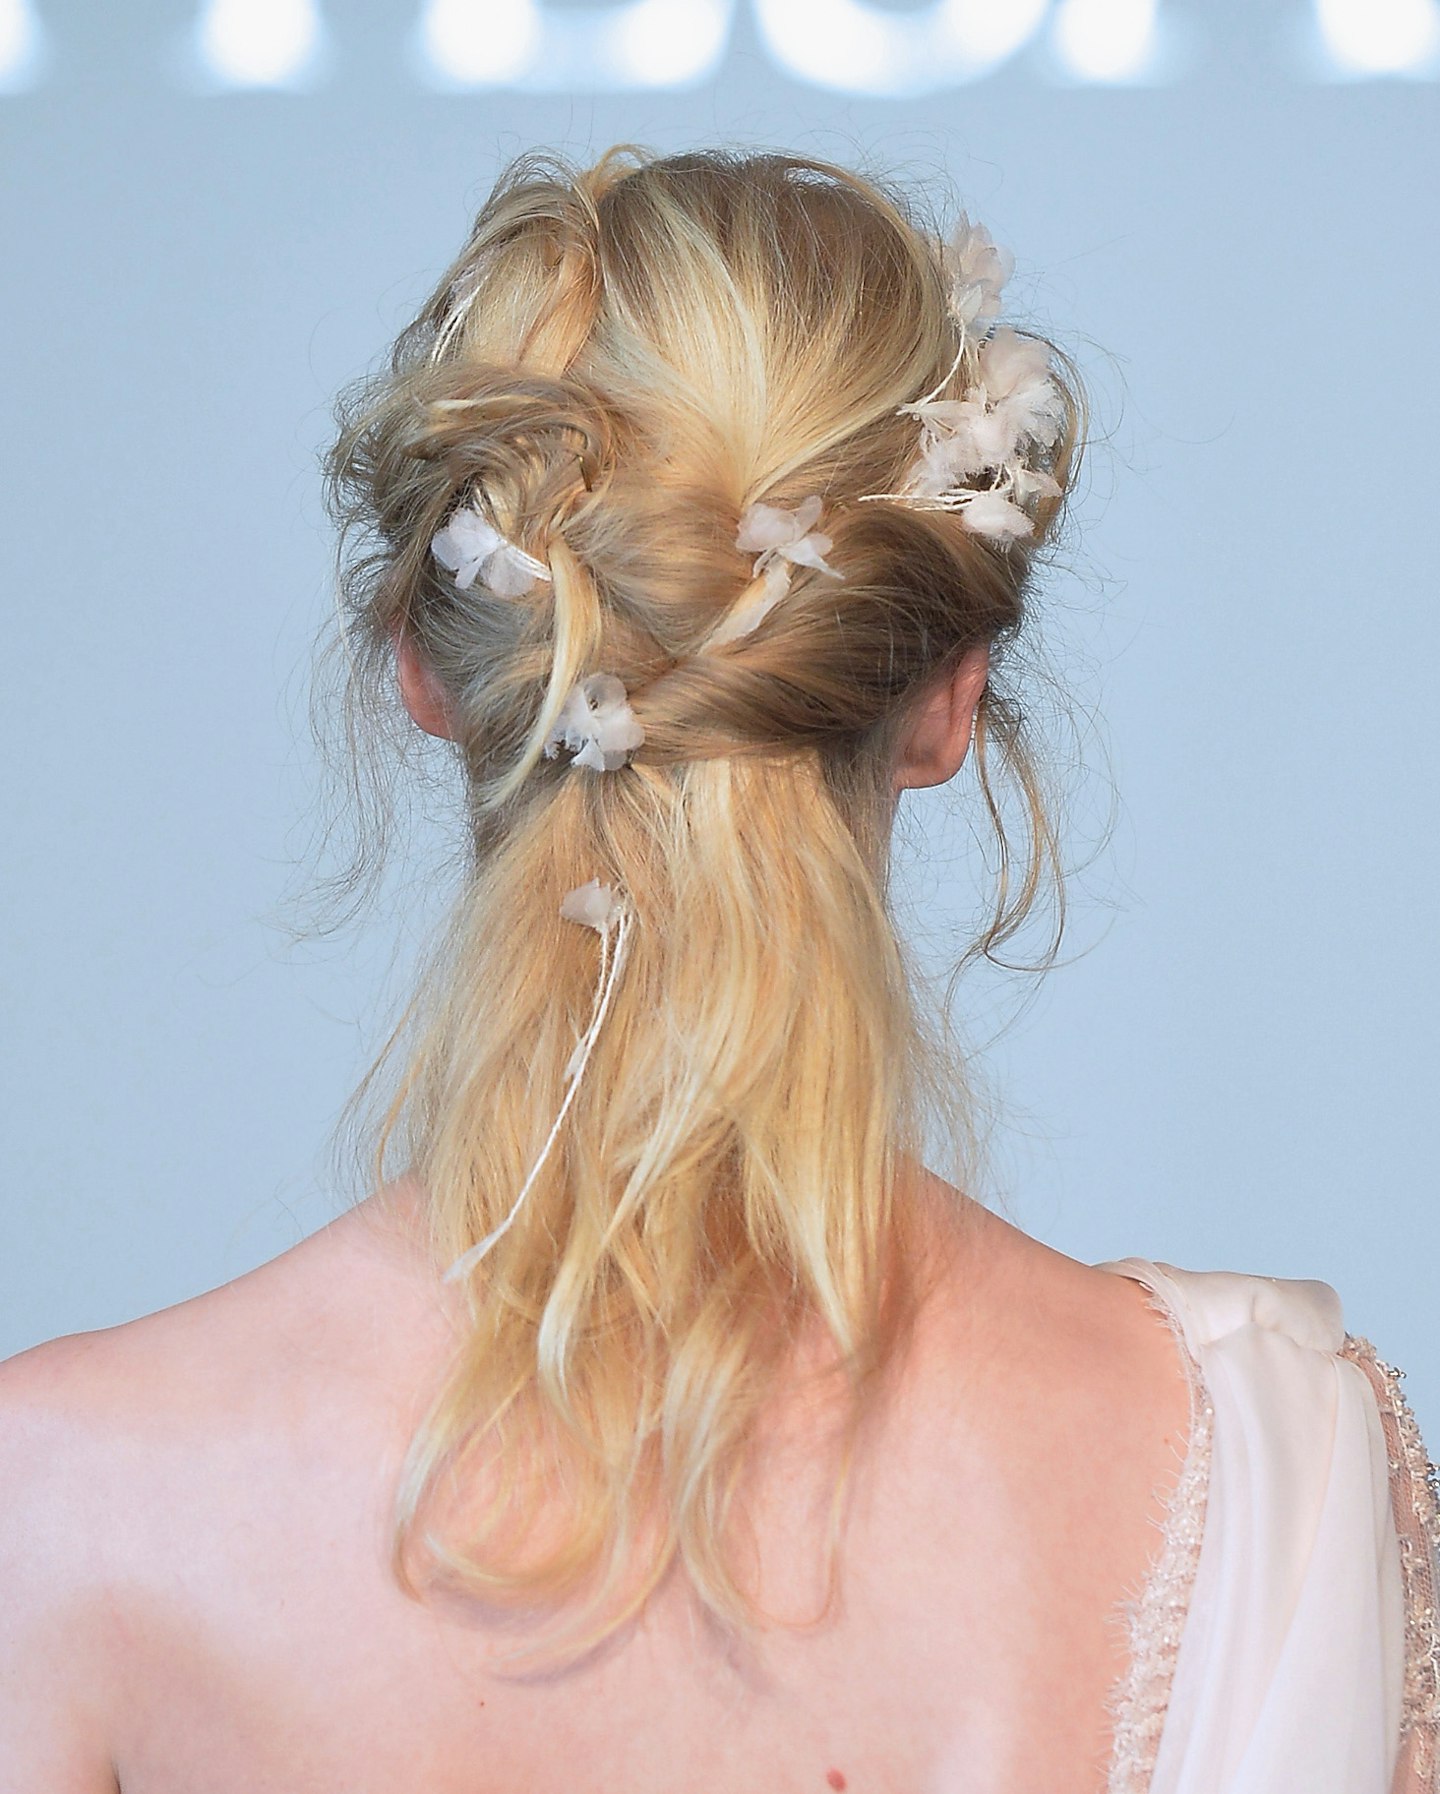 Wedding hairstyle ideas - Bridal hair trends